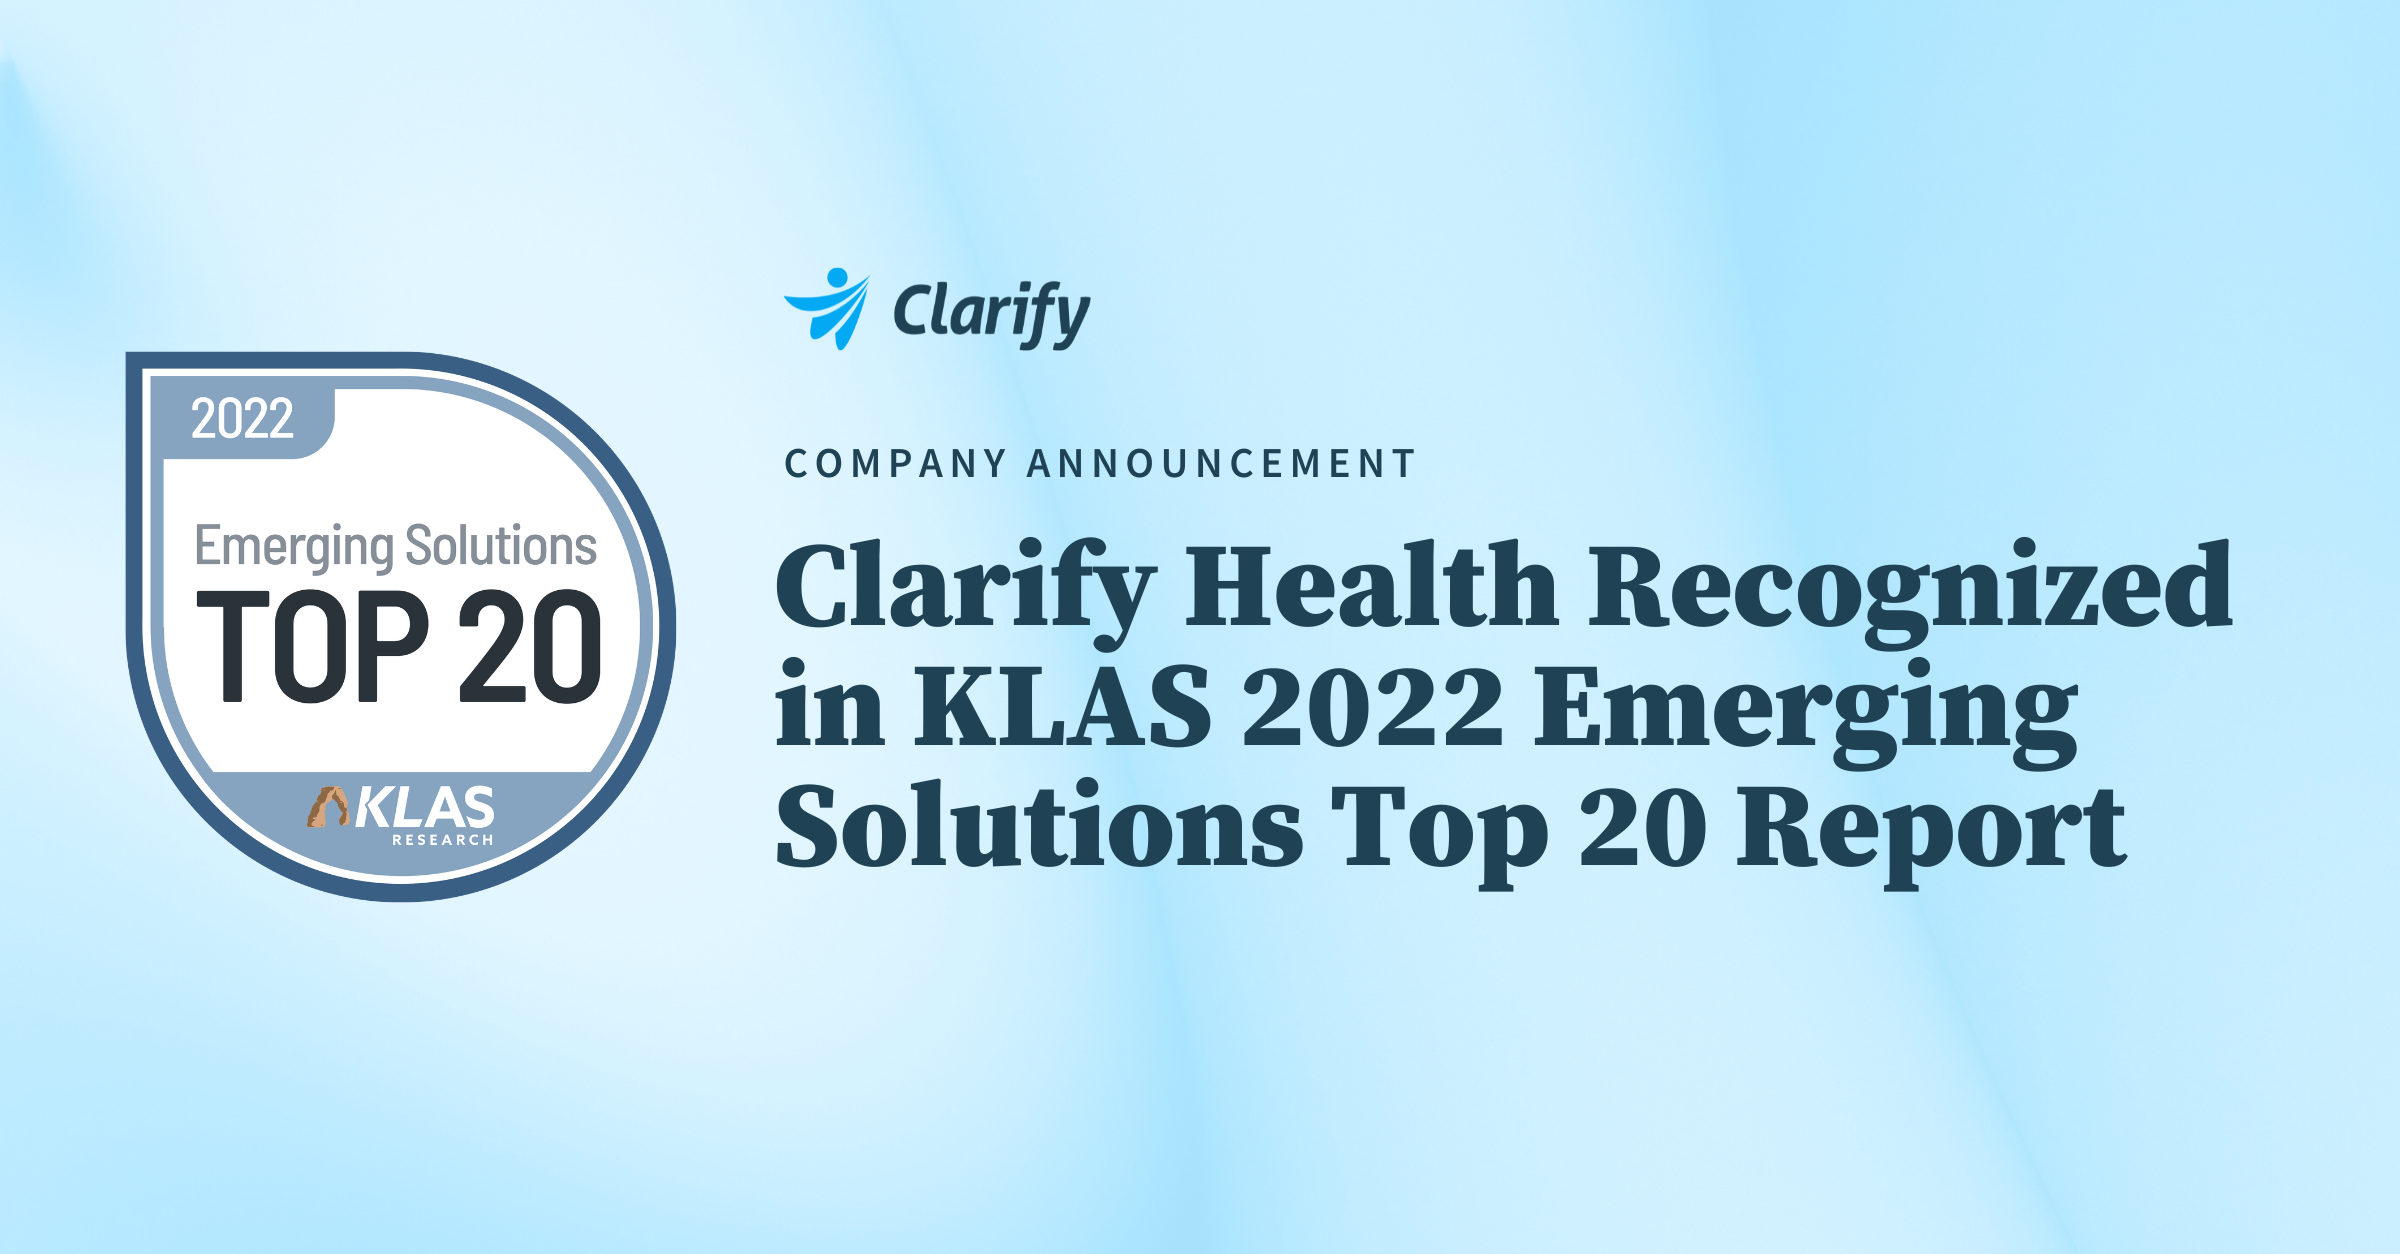 Clarify Health Recognized in KLAS 2022 Emerging Solutions Top 20 Report